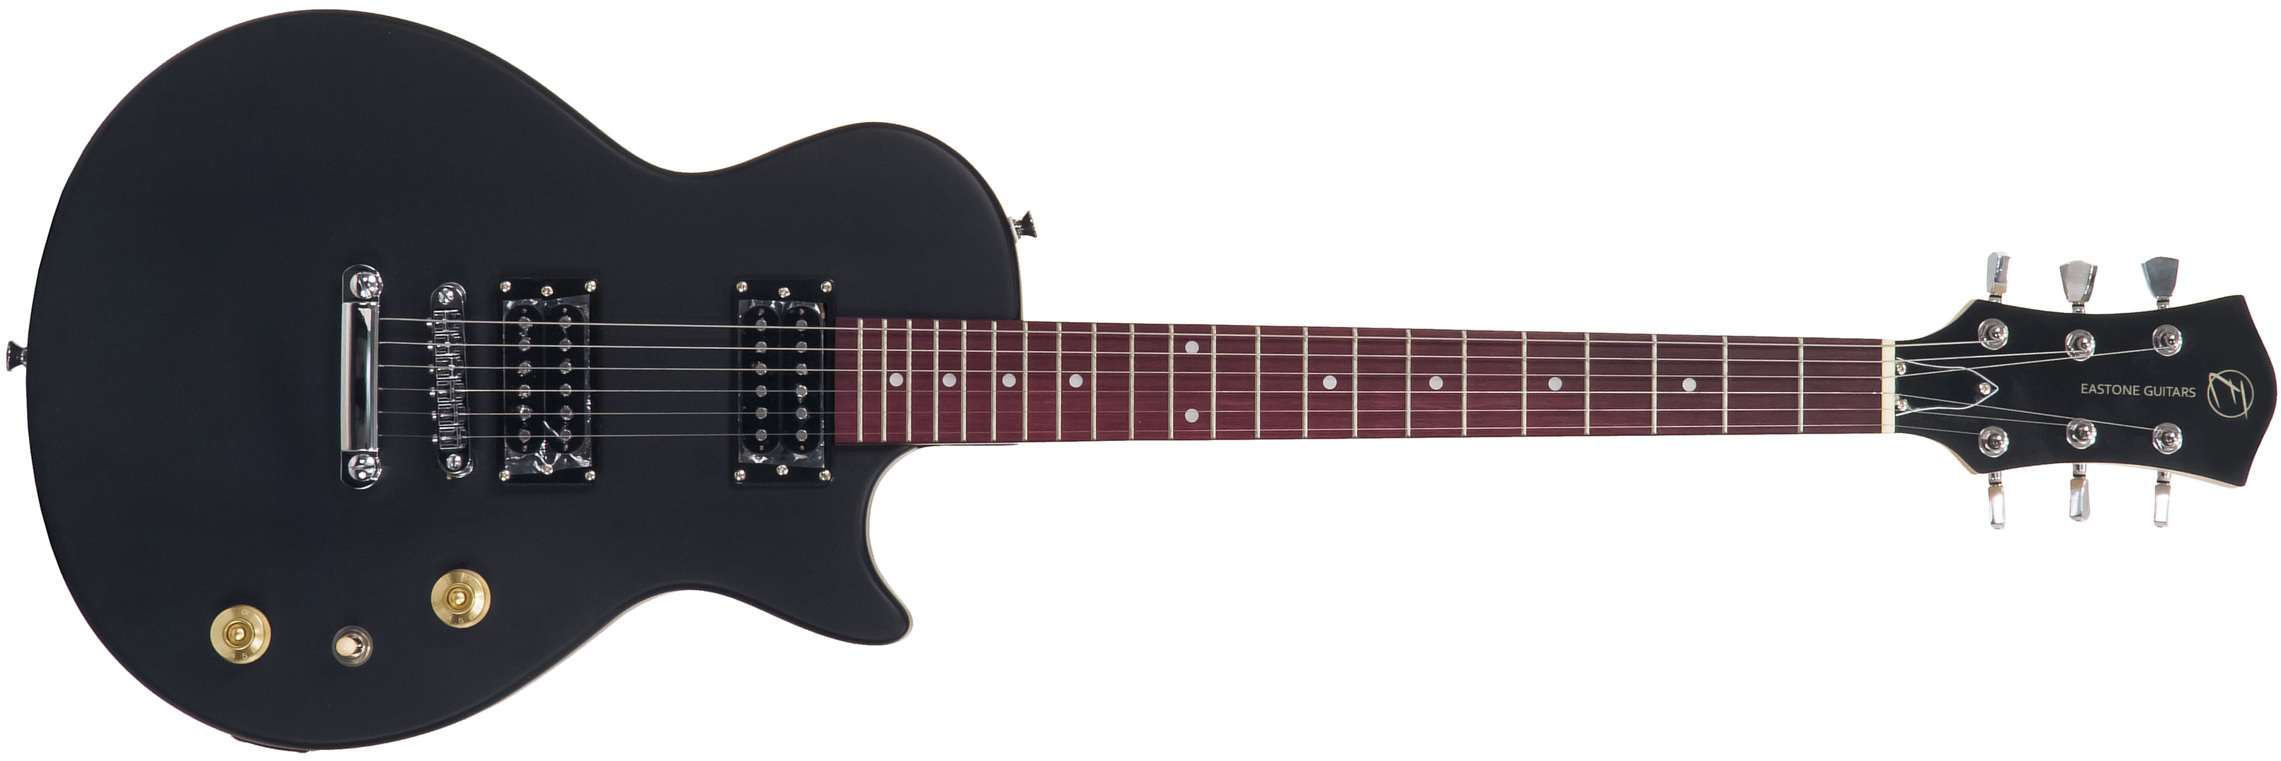 Eastone Lpl70 Hh Ht Pur - Black Satin - Single-Cut-E-Gitarre - Main picture